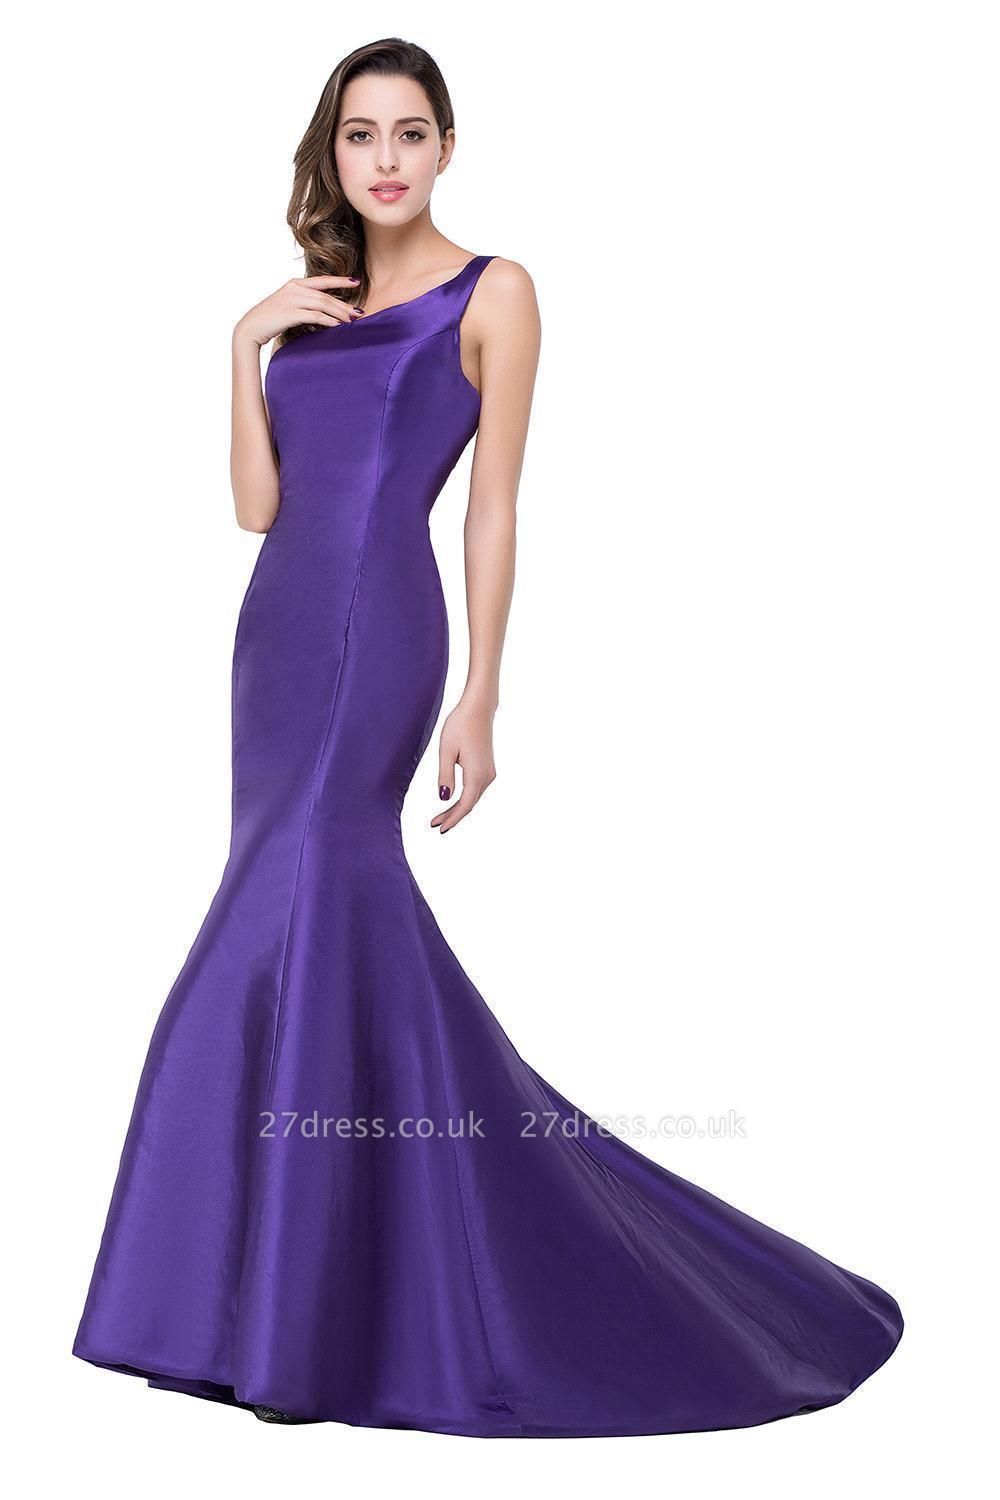 Elegant Burgundy One Shoulder Mermaid Prom Dress UK With Train